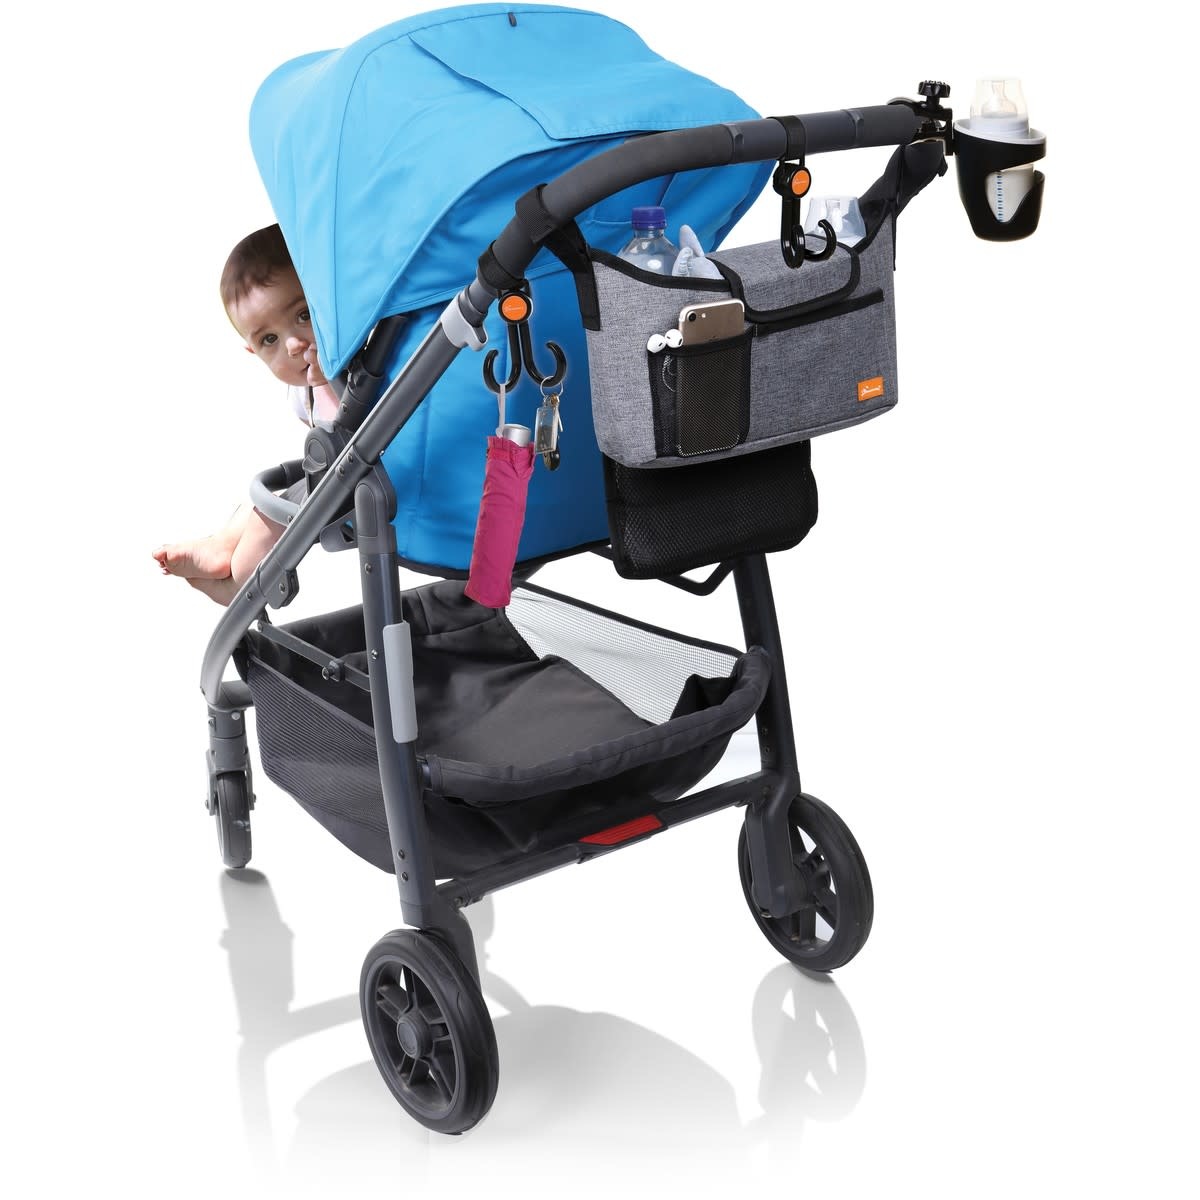 Dreambaby Dreambaby On-The-Go Stroller Kit - Grey Denim